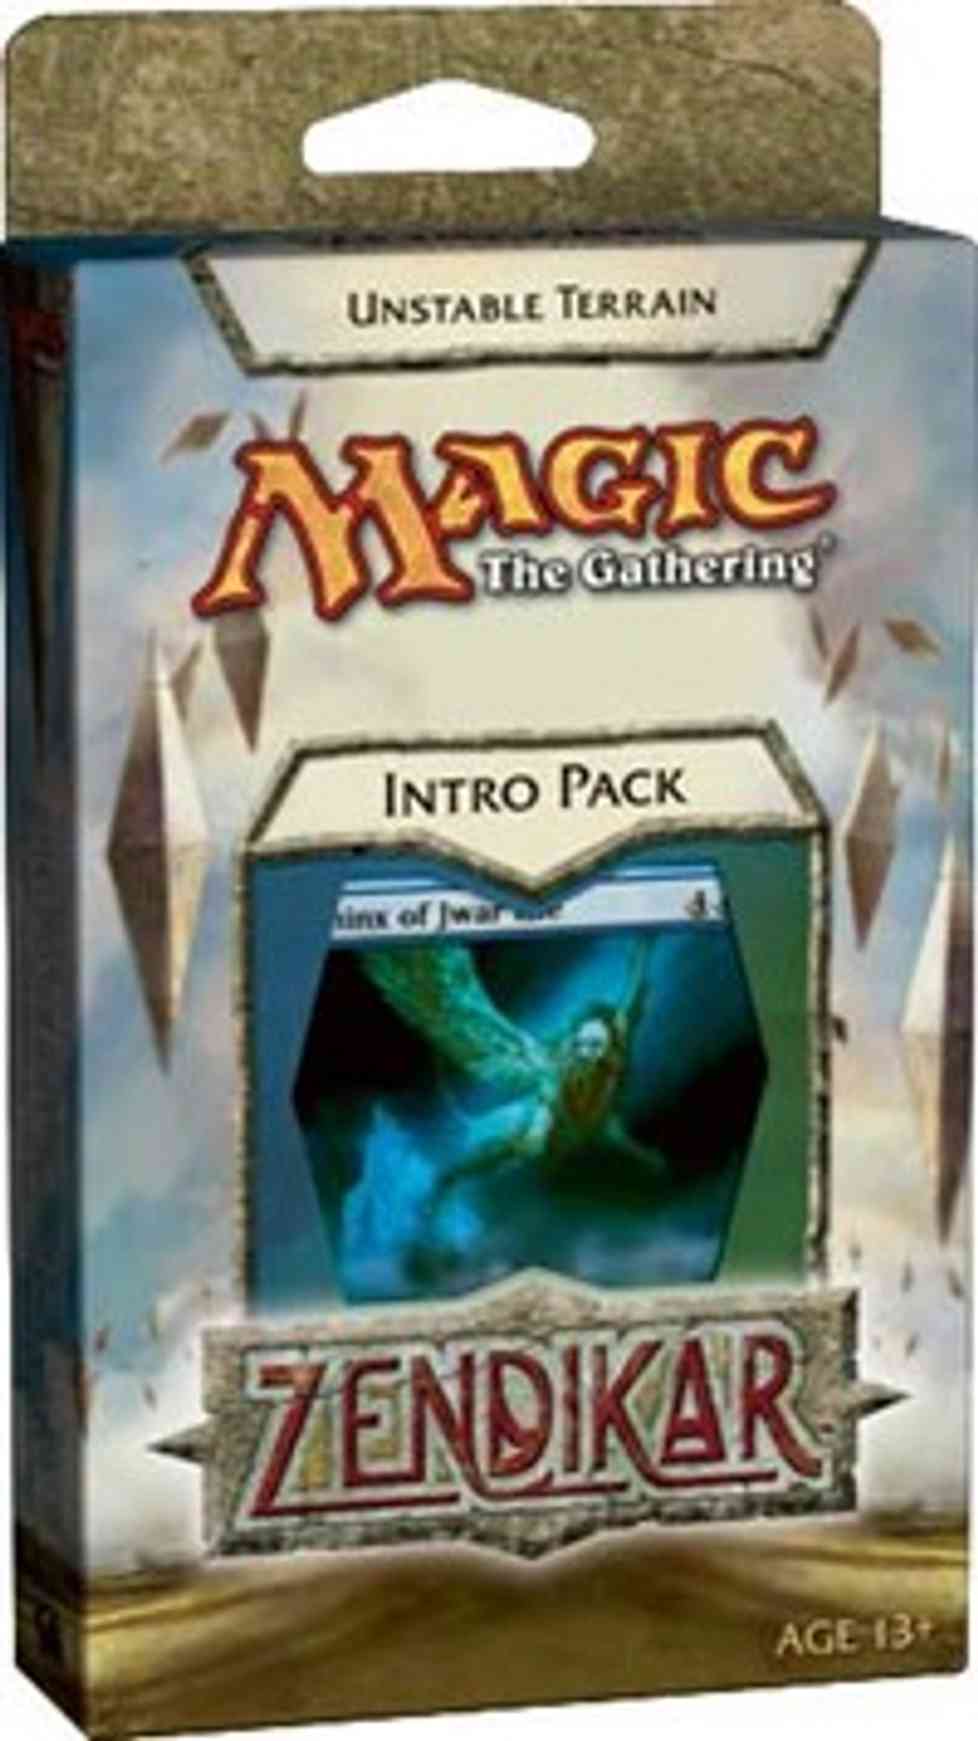 Zendikar - Intro Pack - Blue - Unstable Terrain magic card front